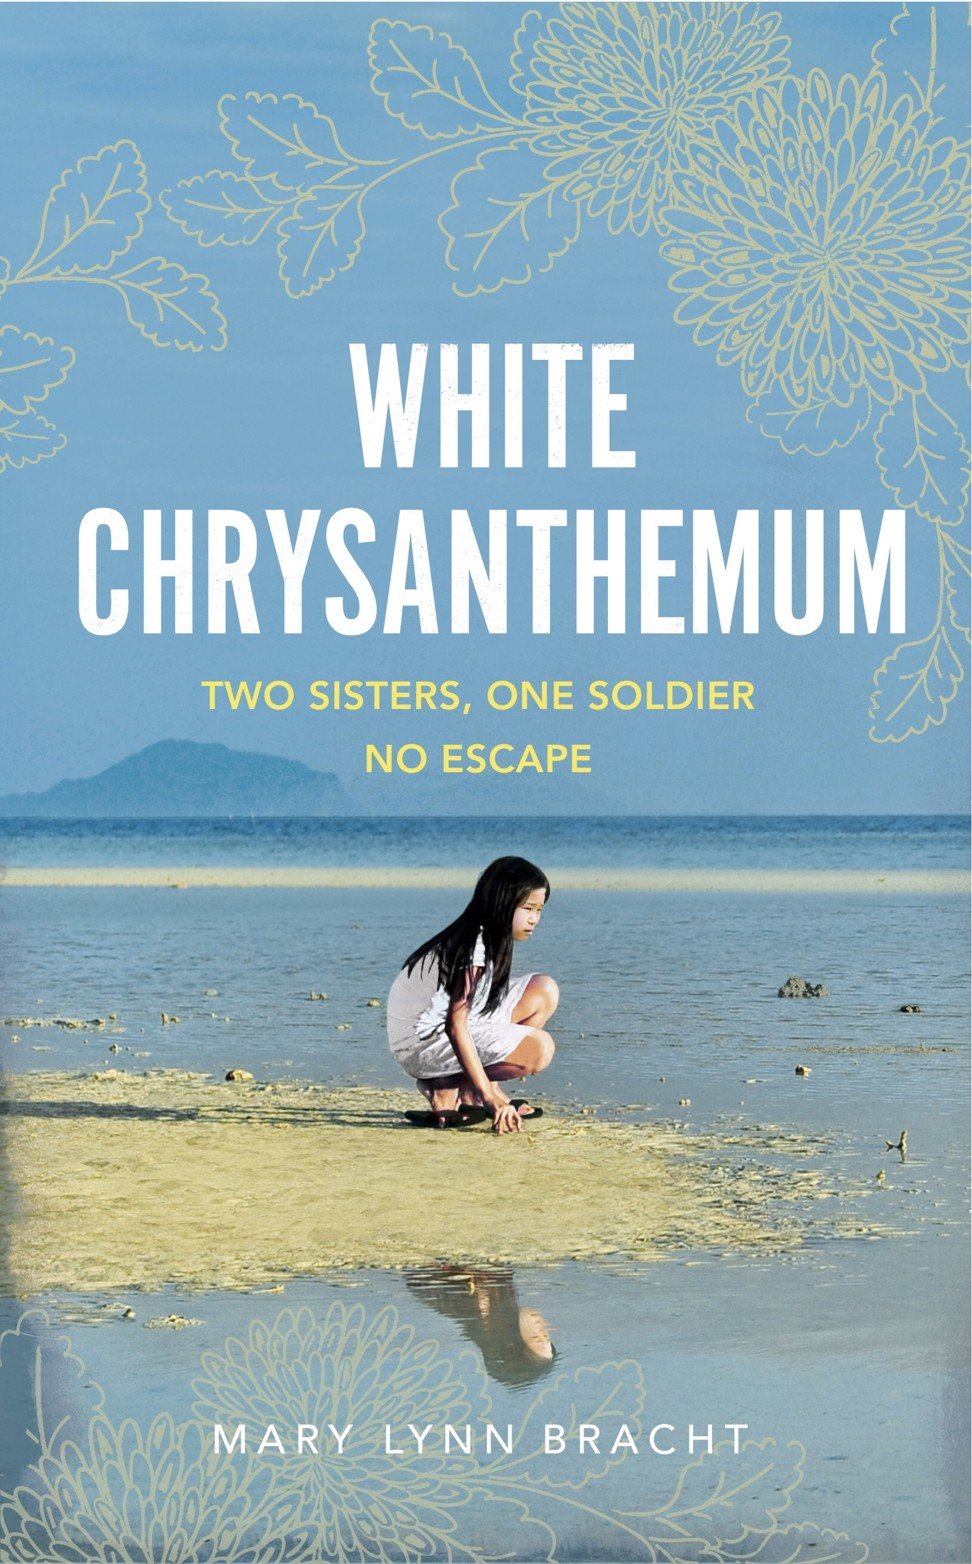 White Chrysanthemum by Mary Lynn Bracht.